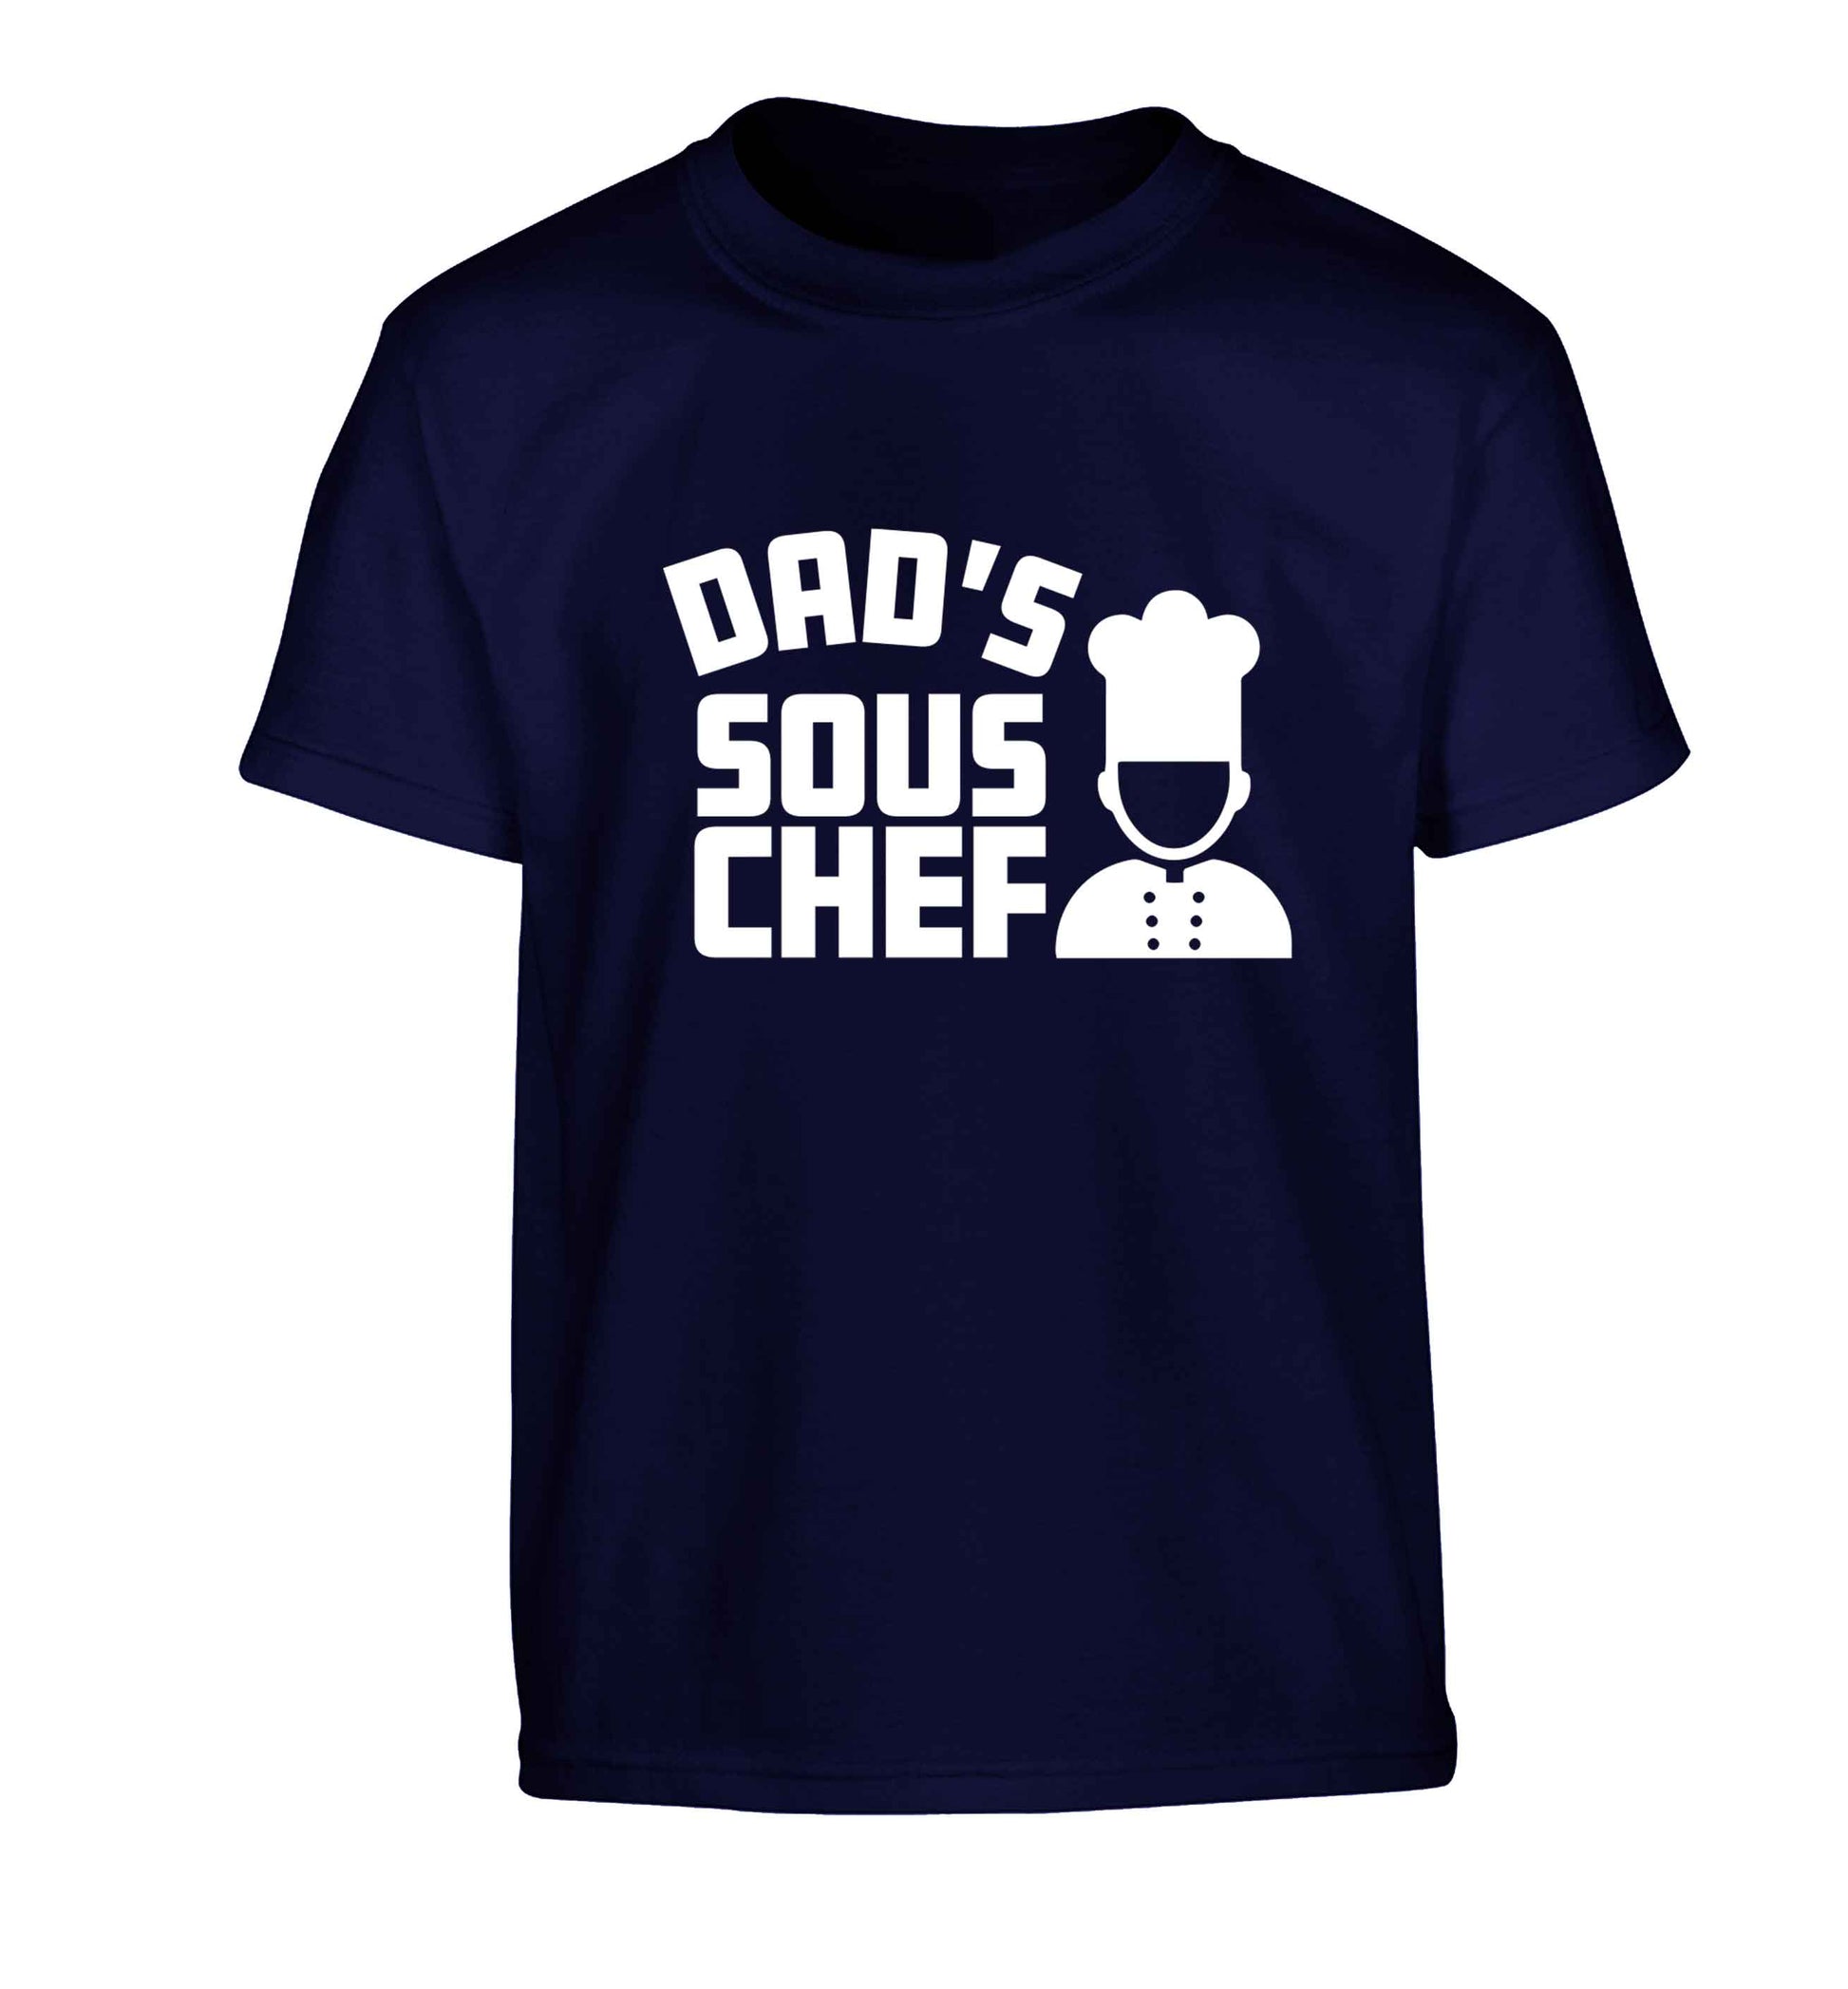 Dad's sous chef Children's navy Tshirt 12-13 Years